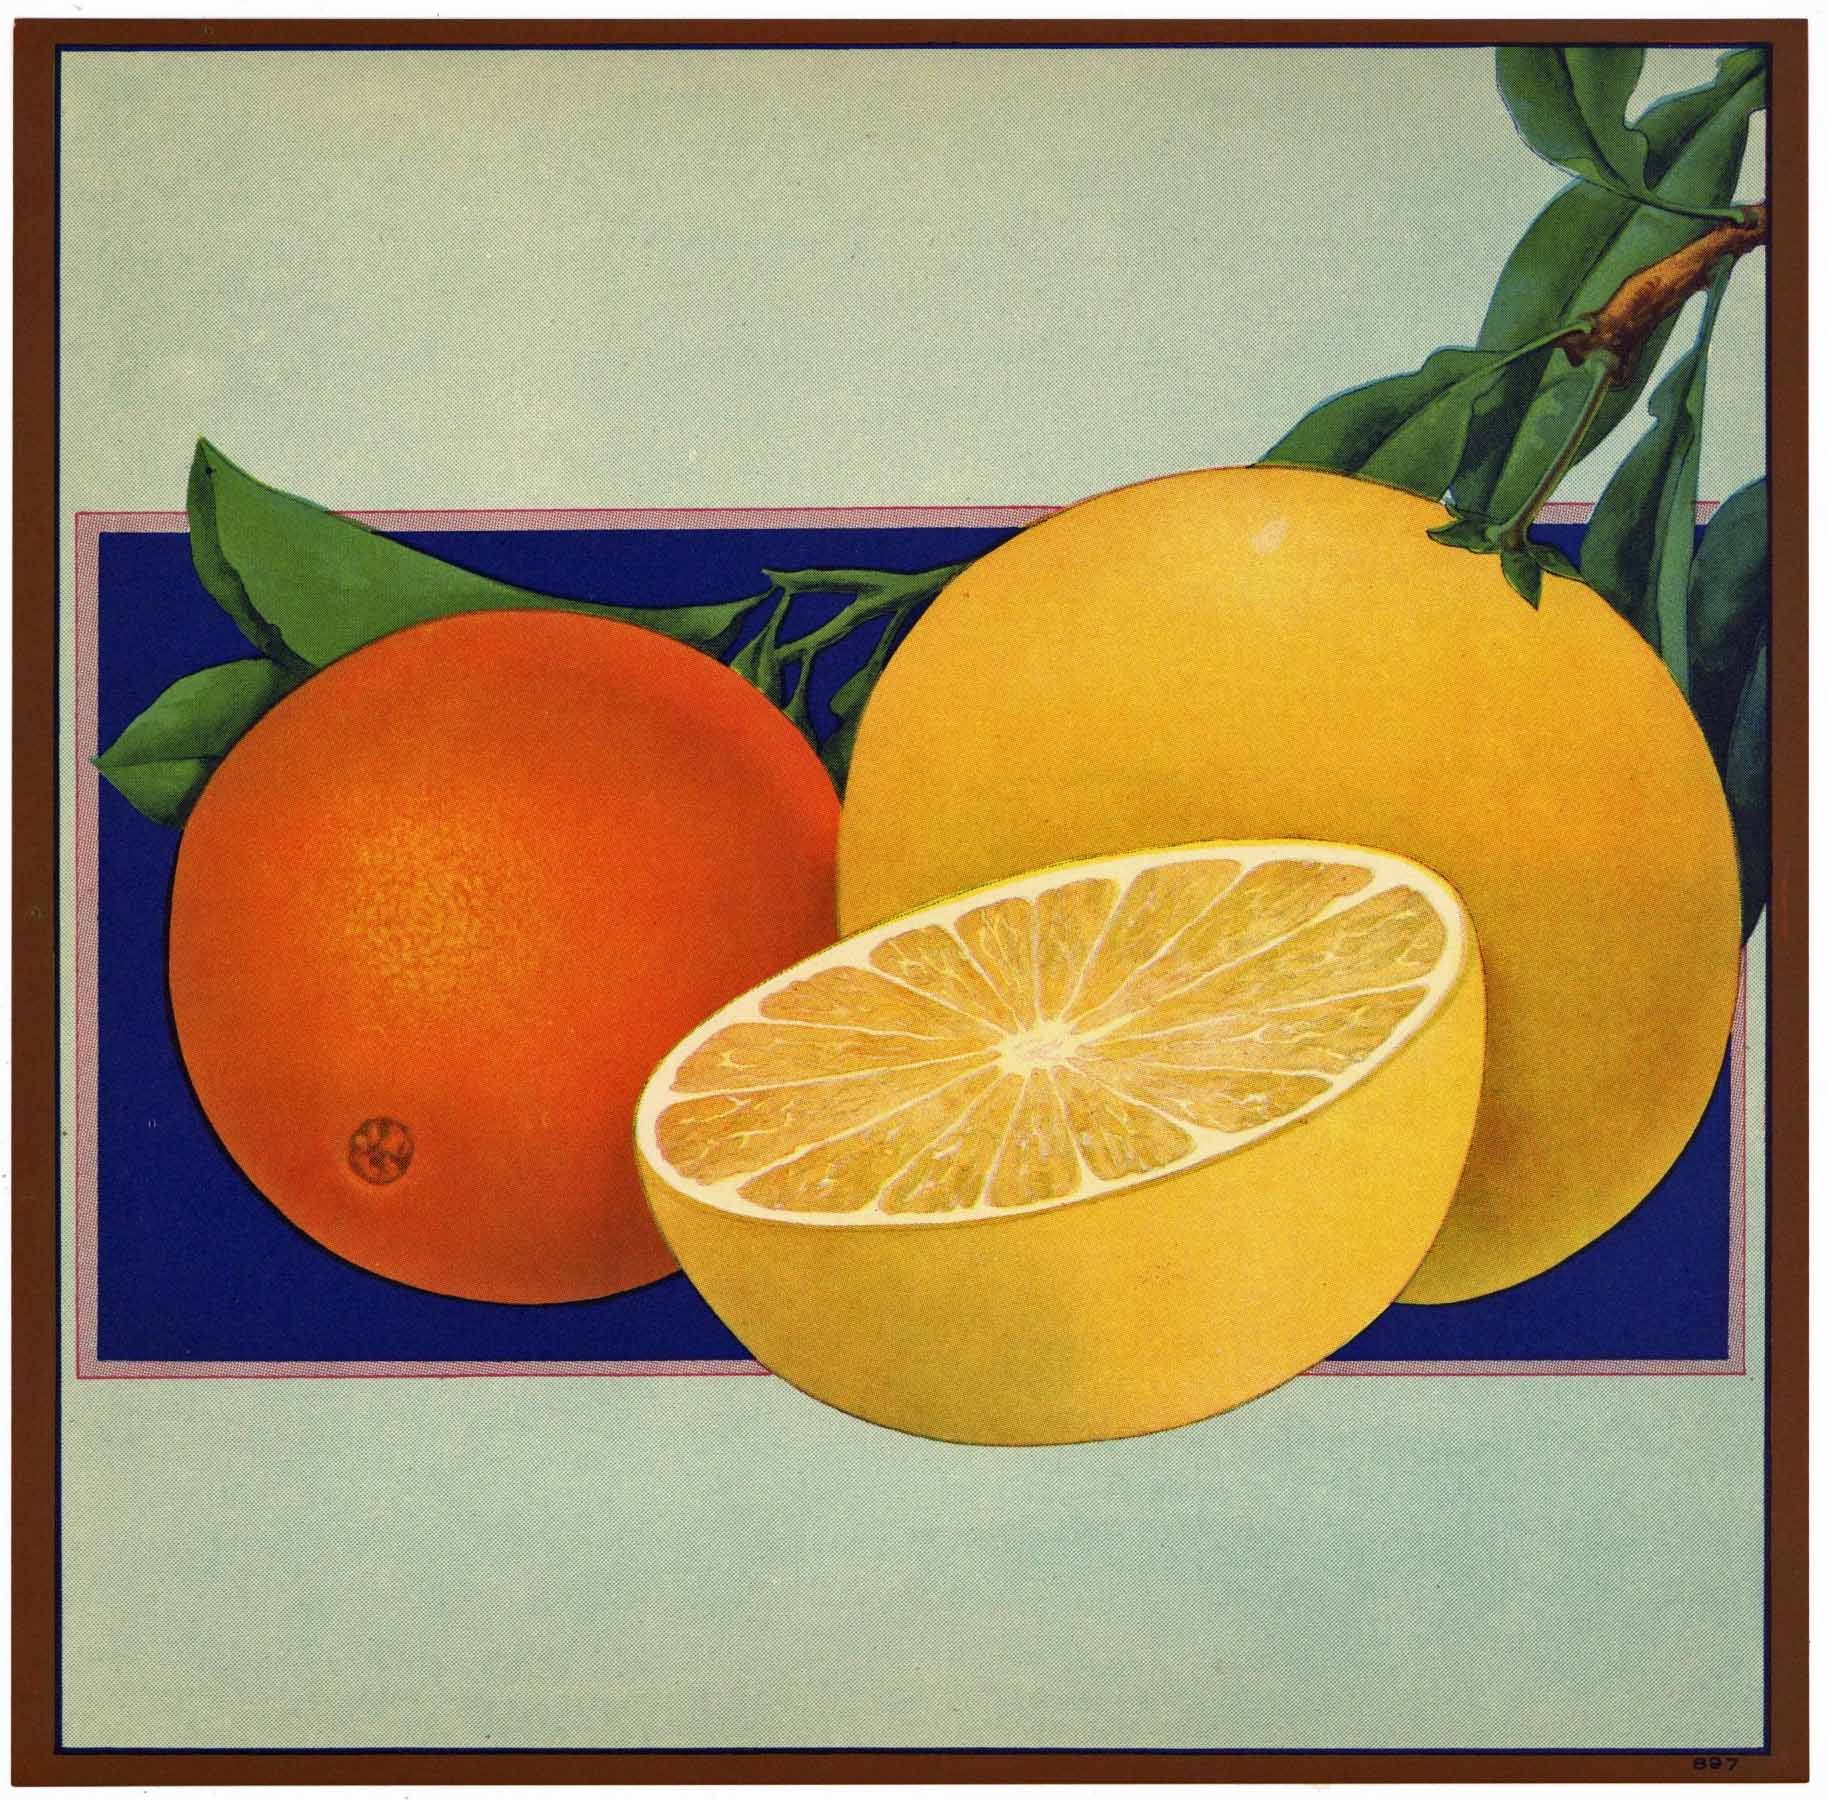 Stock #897 Vintage Florida Citrus Crate Label